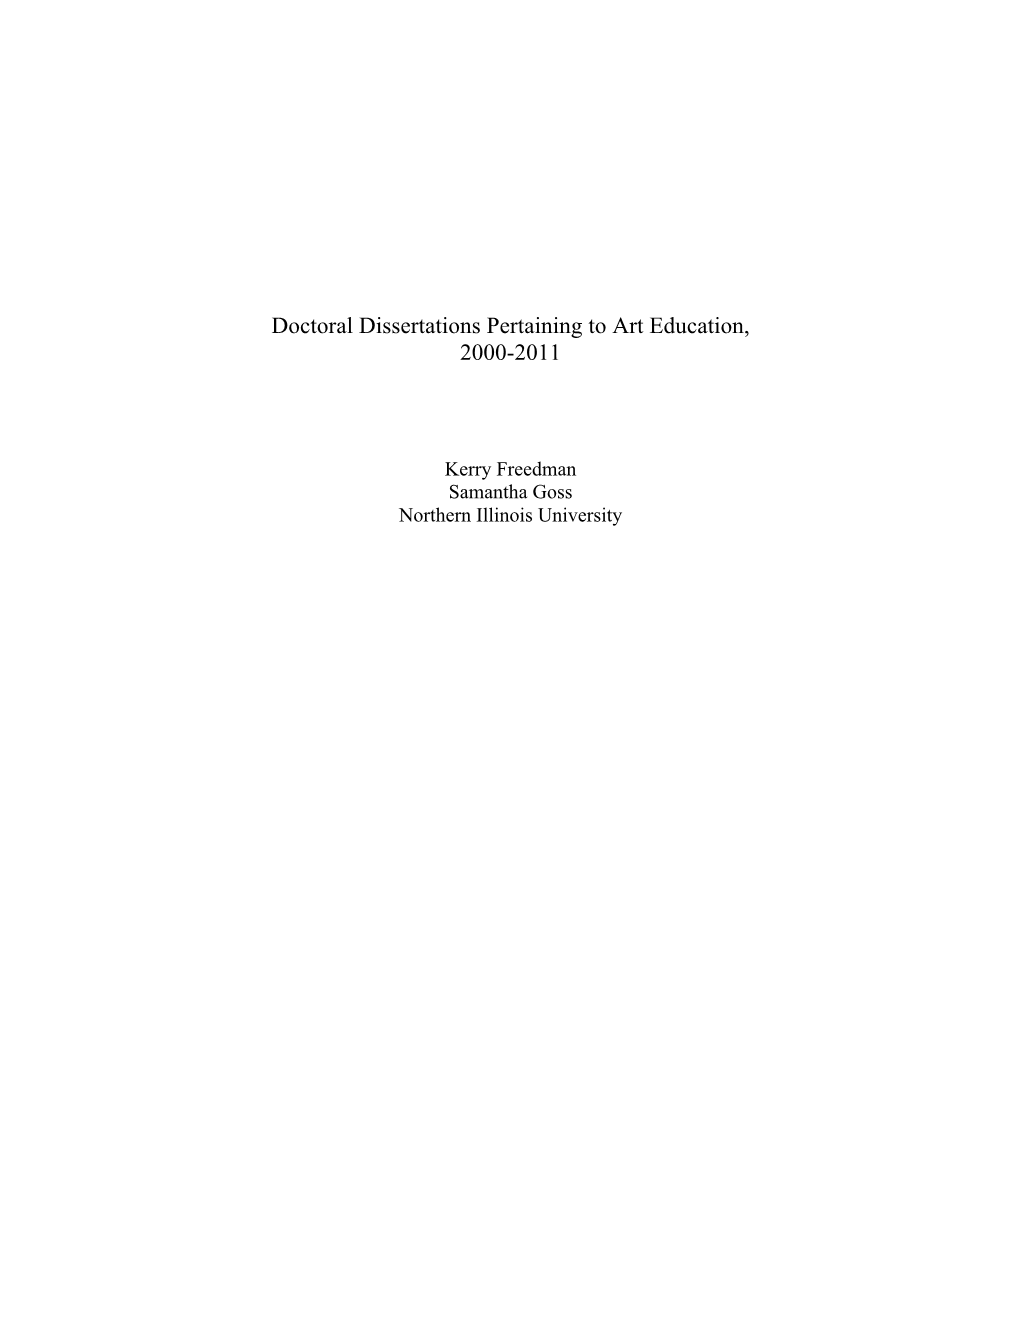 Dissertations 2000-2011